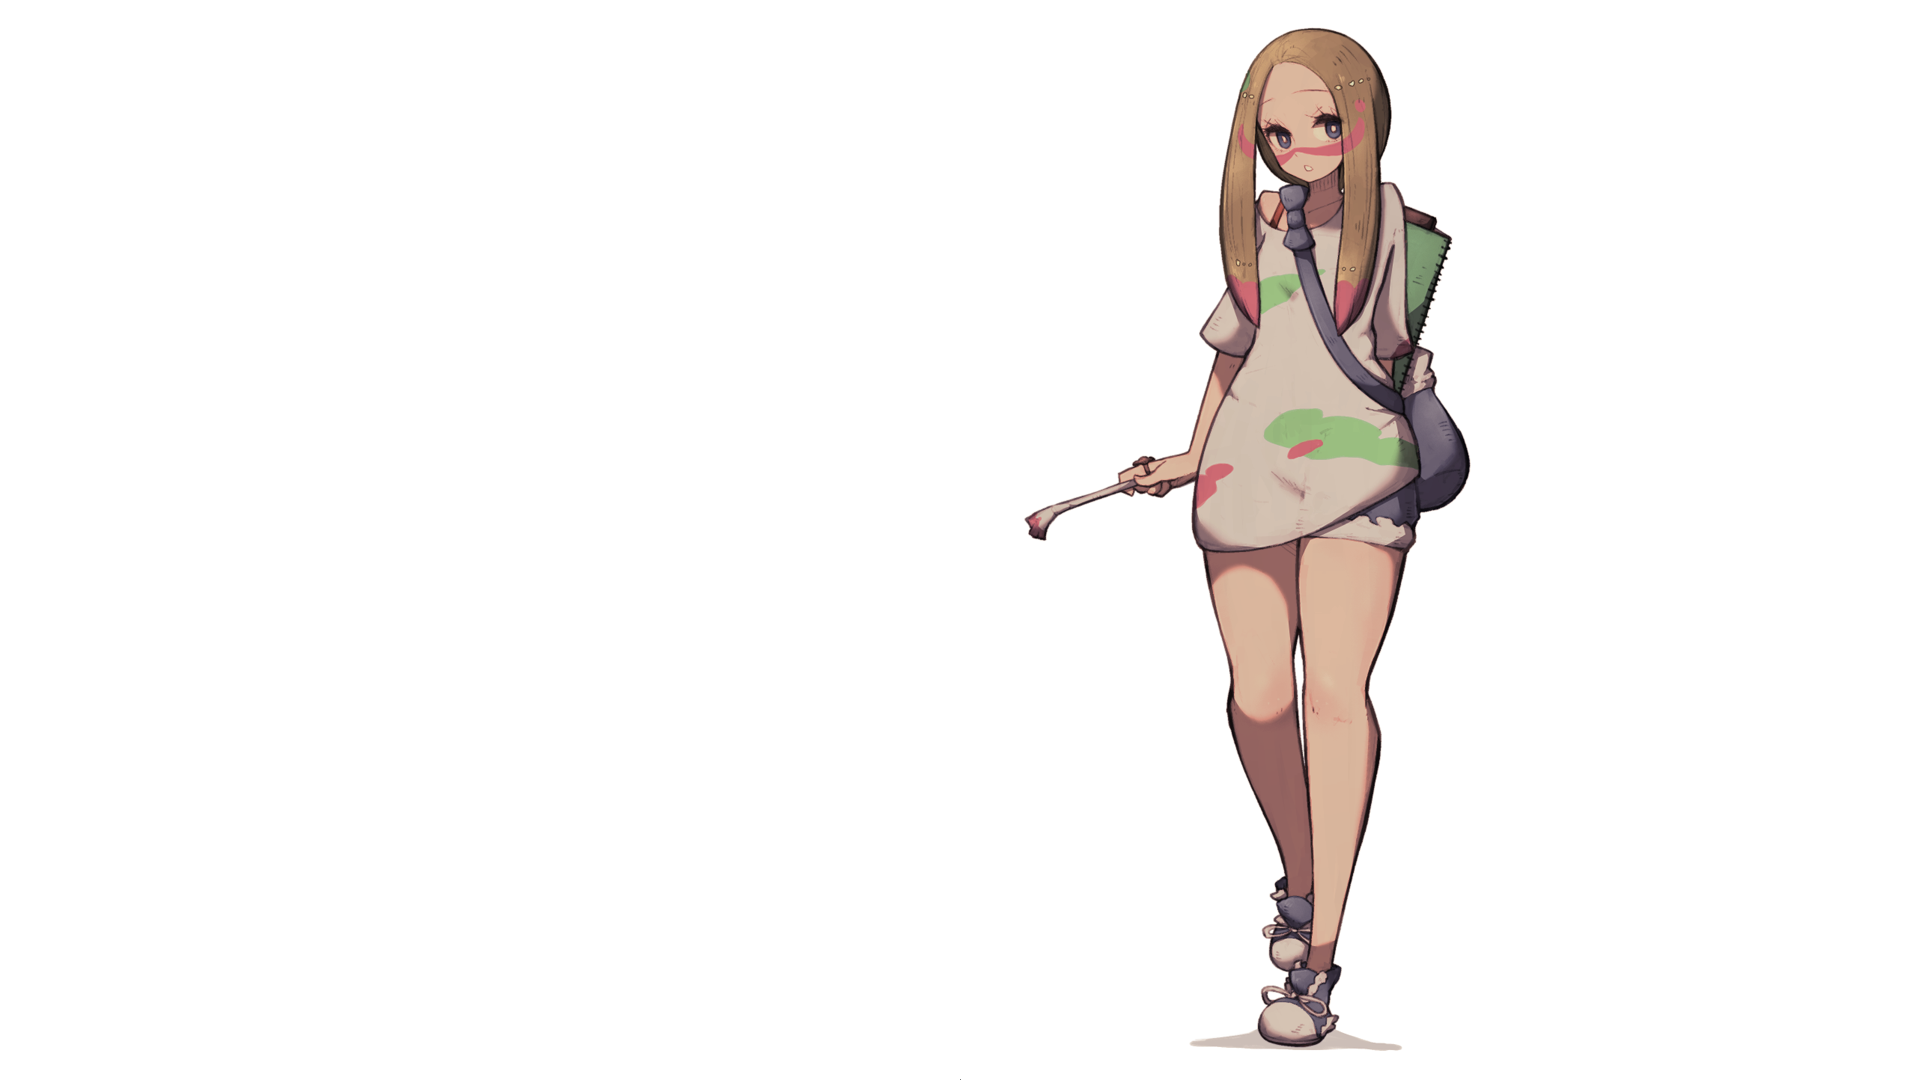 Anime 1920x1080 anime anime girls simple background Pokémon Pokemon Sun and Moon thighs thigh-highs shorts short shorts blonde LambOic029